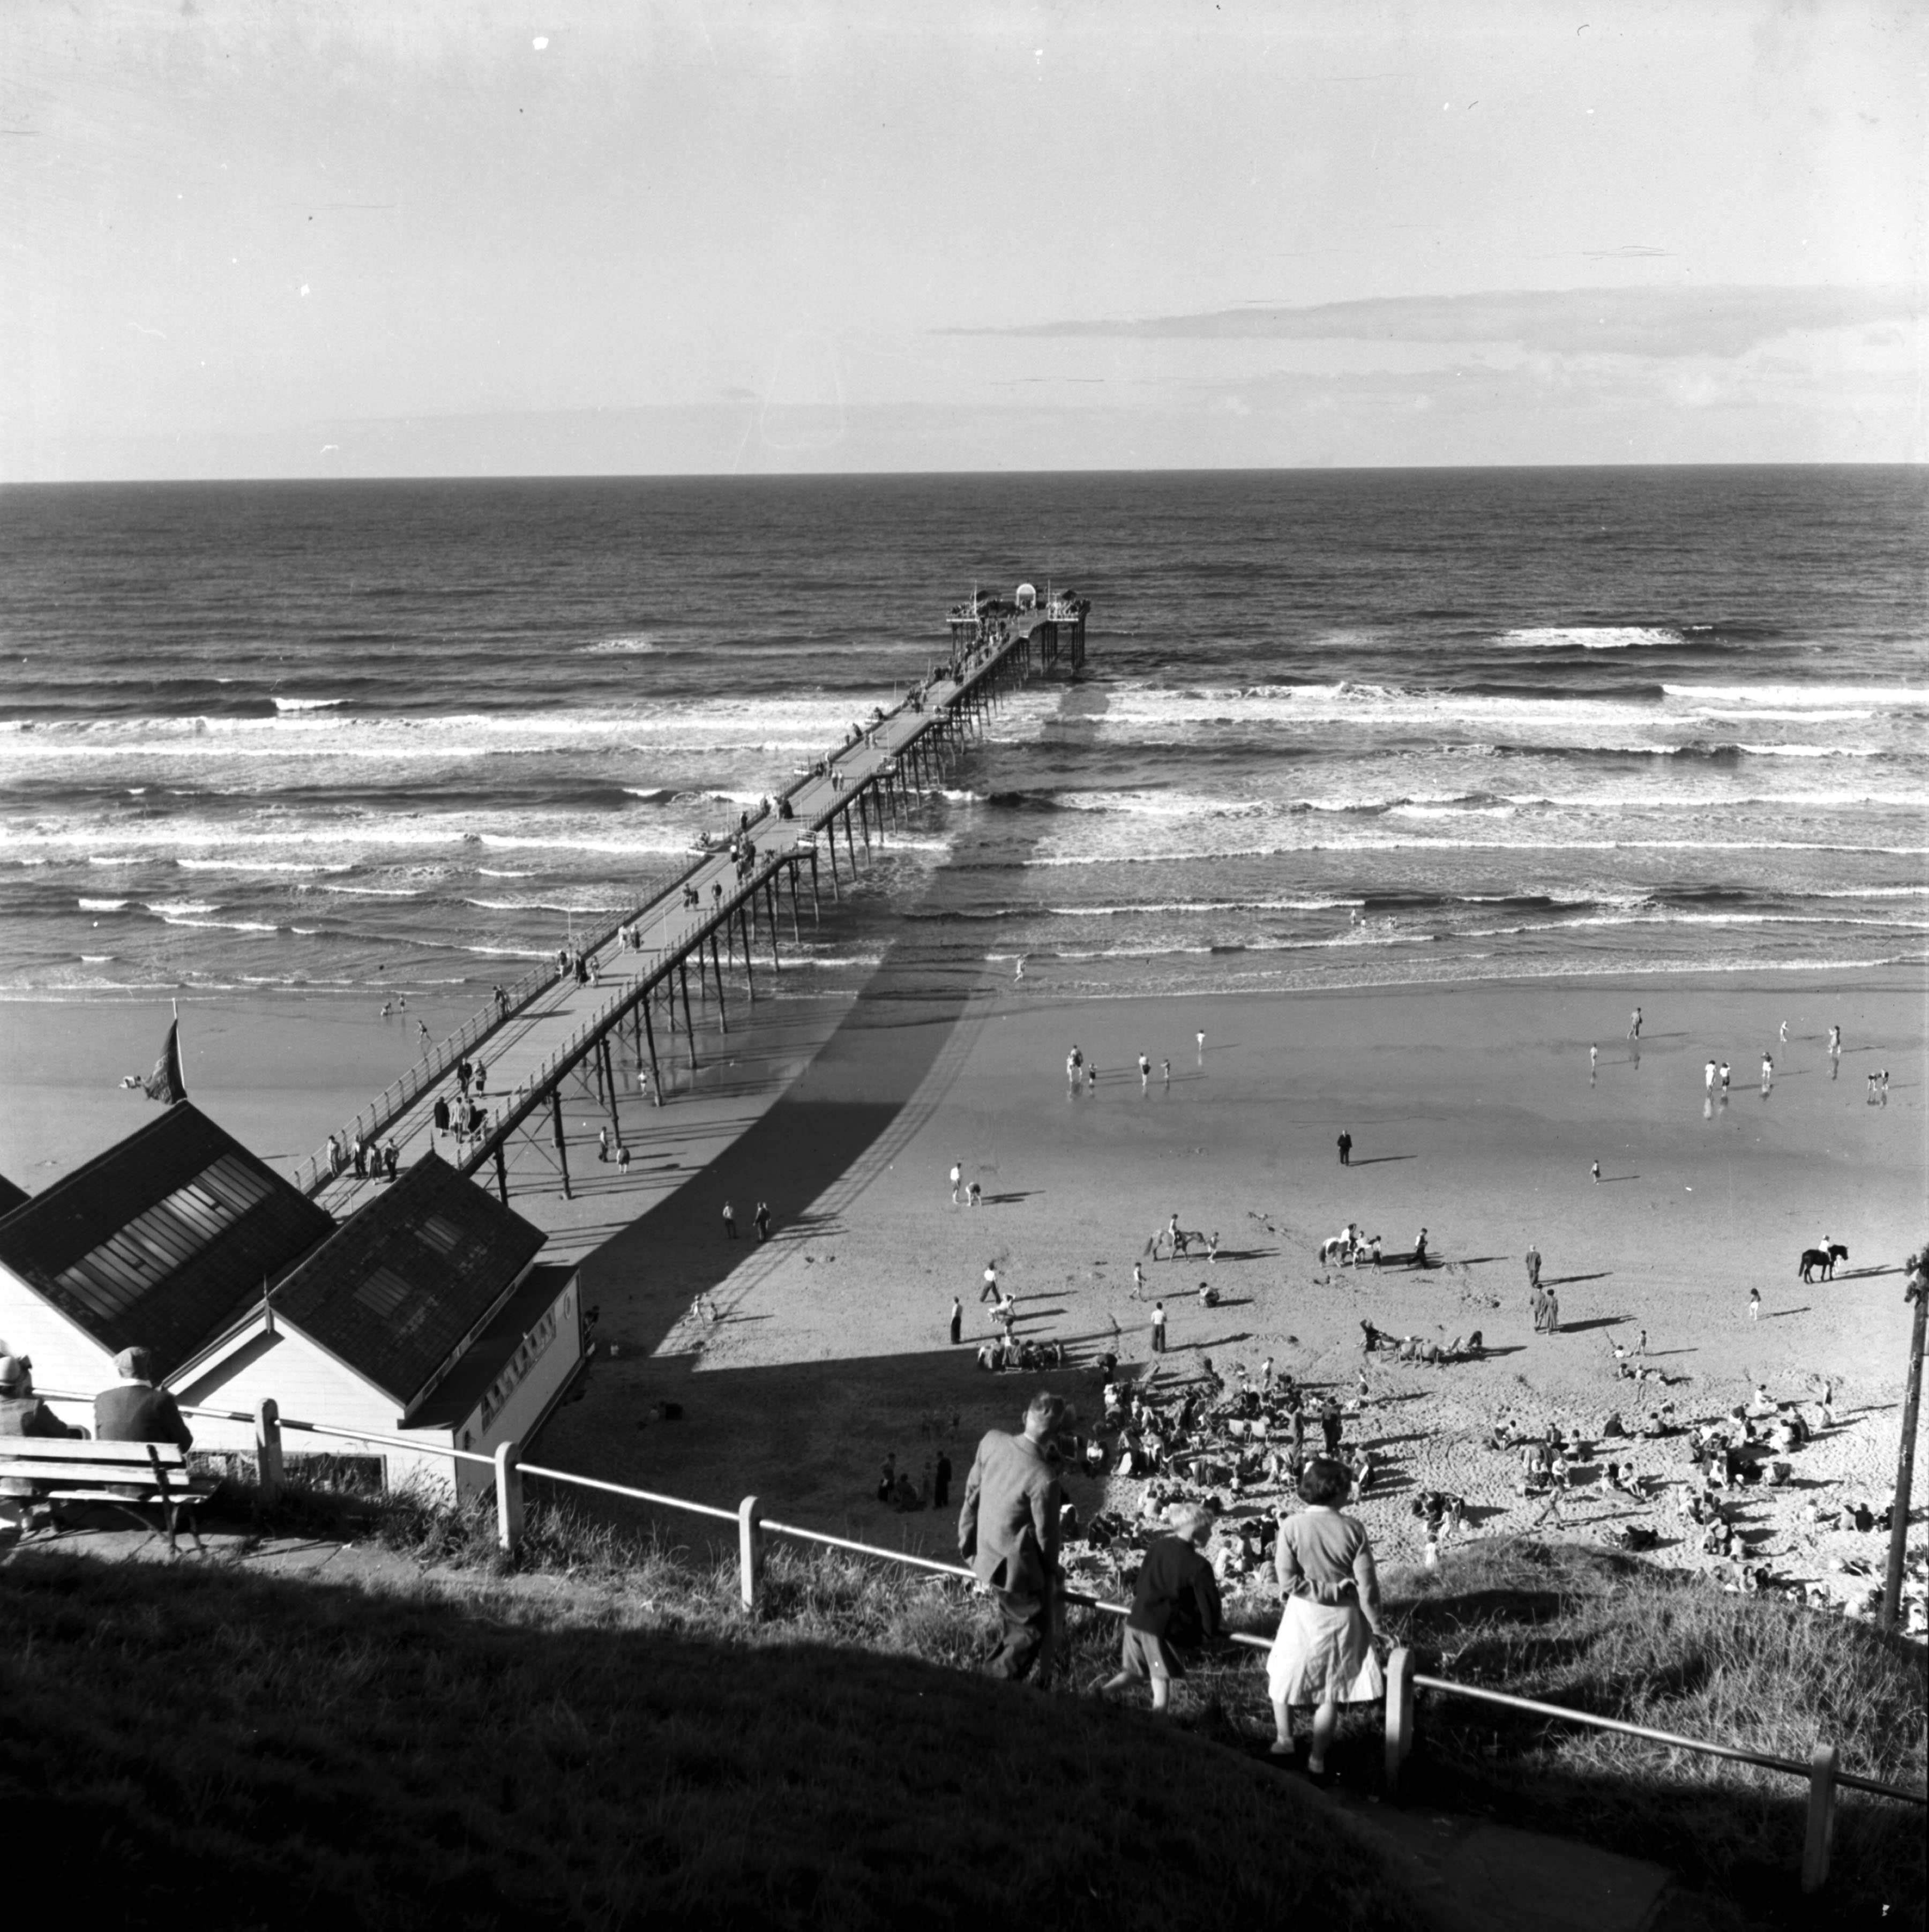 Saltburn Pier in the 1950s or 1960s.